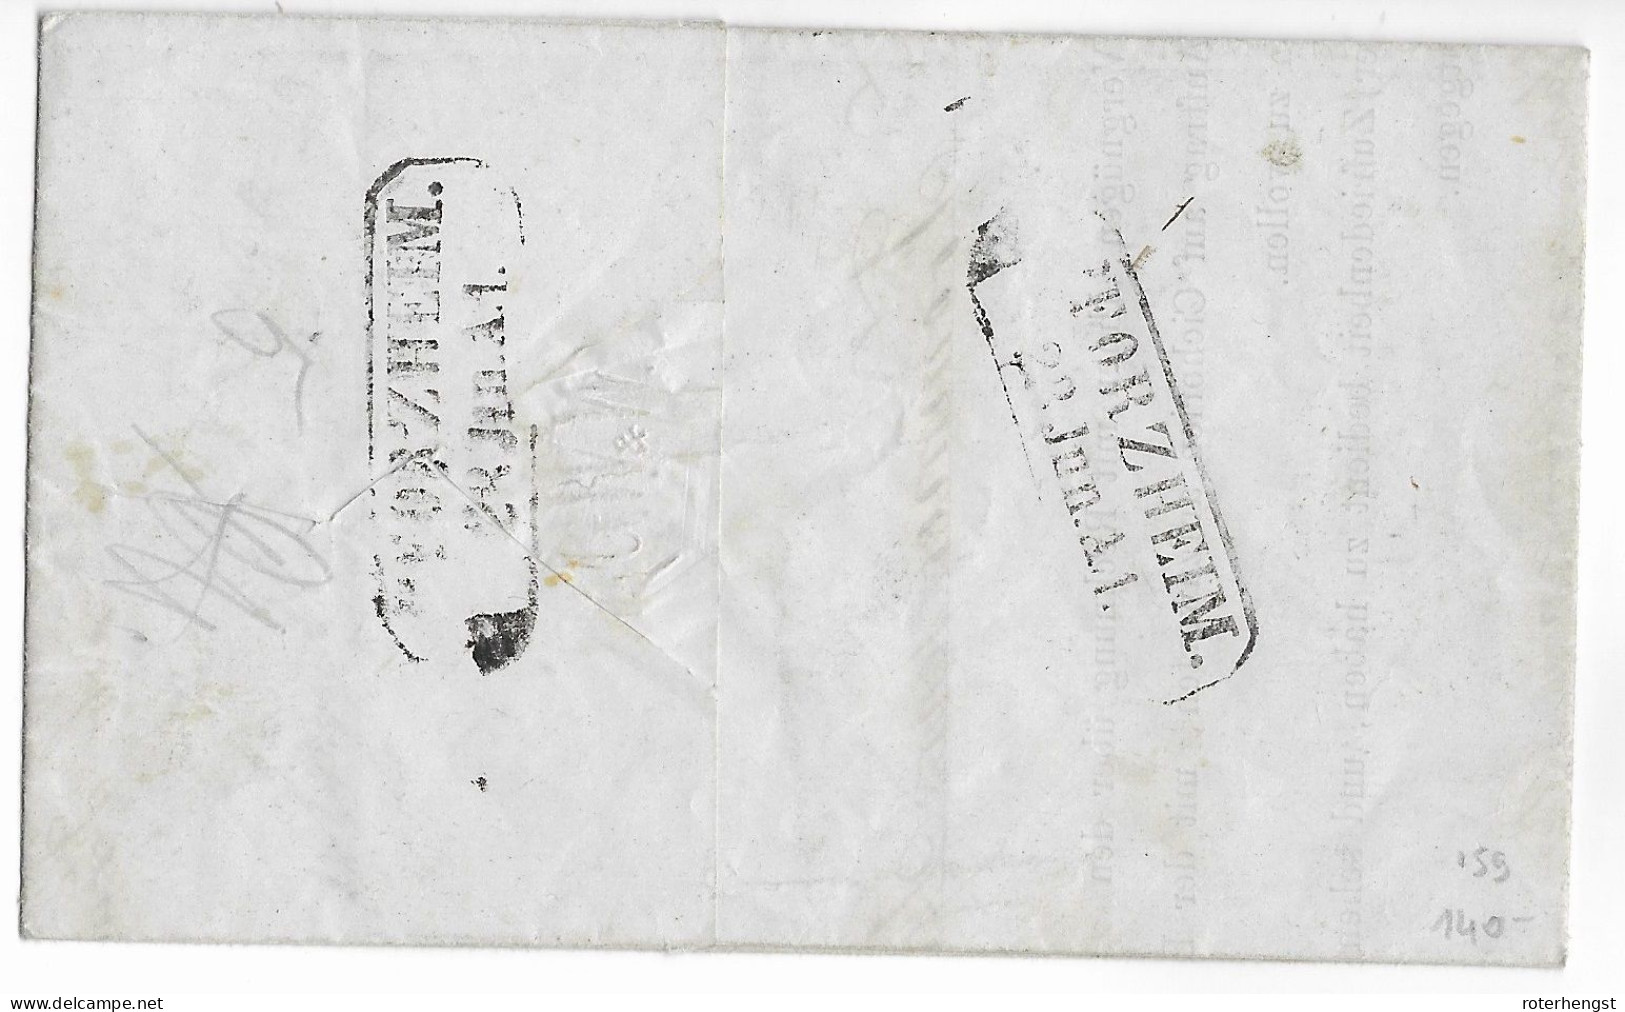 Durlach To Pforzheim 1859 Michel 140 Euros - Lettres & Documents